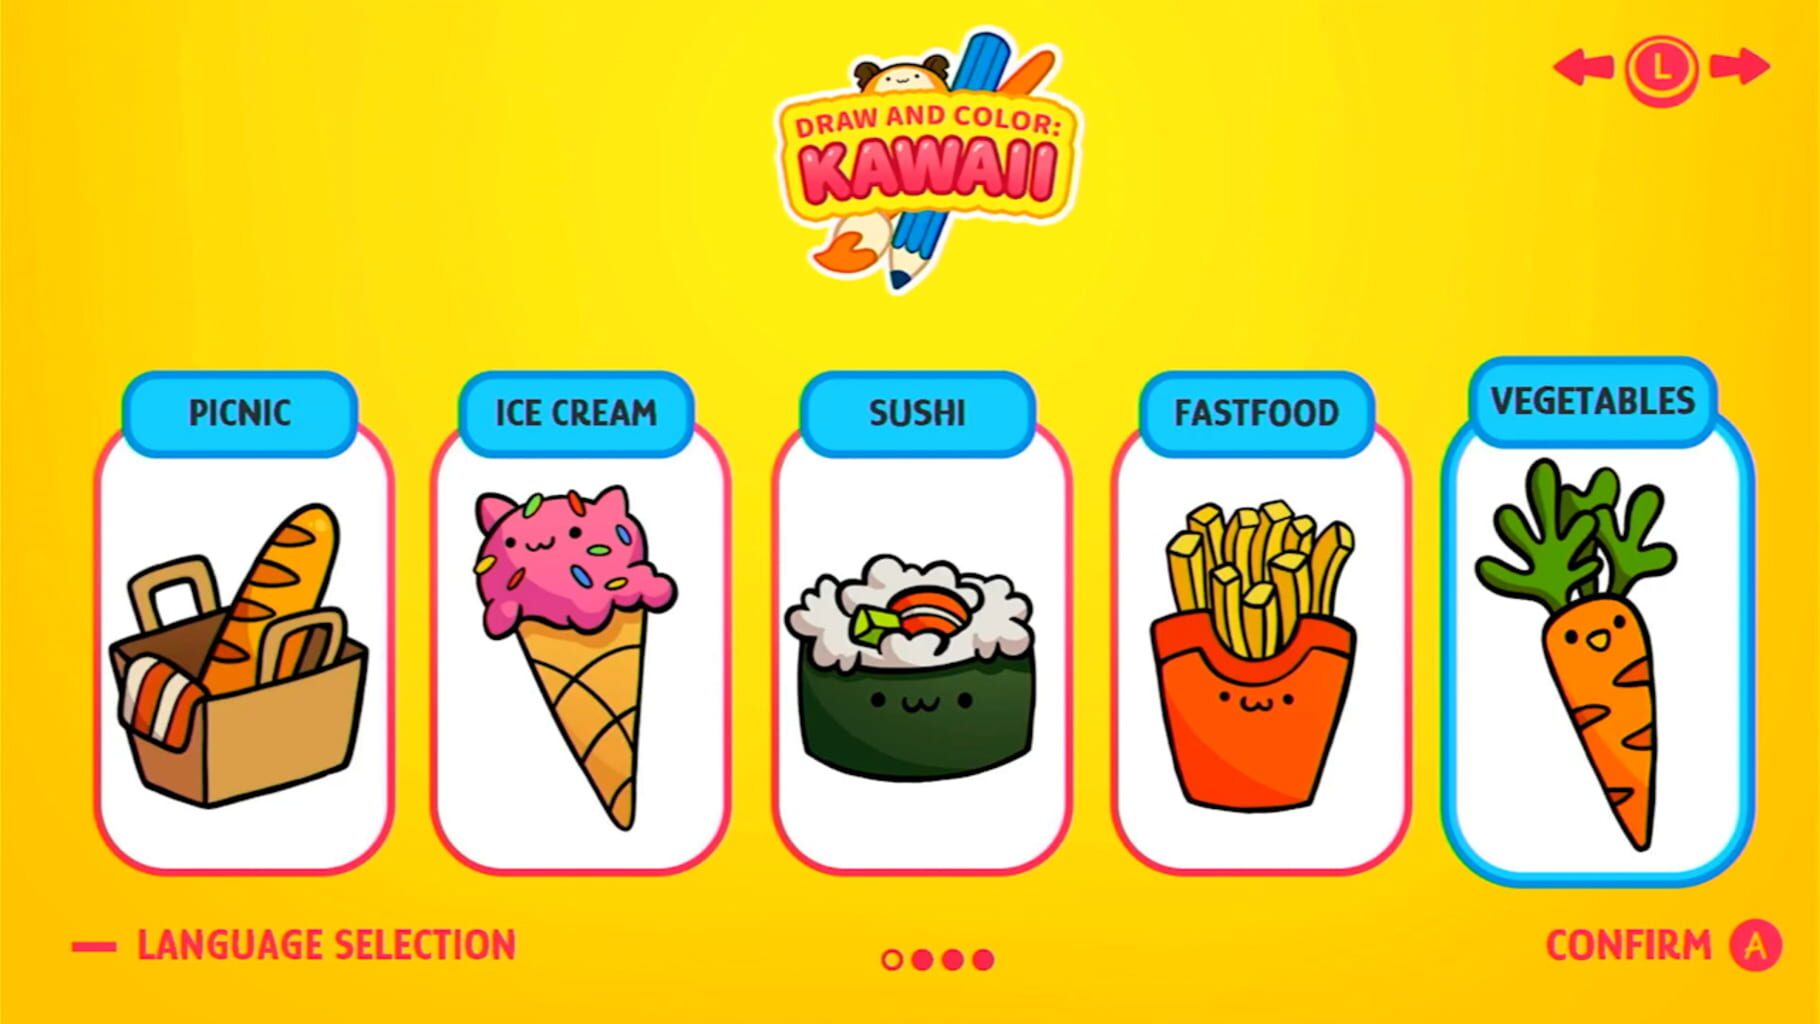 Draw and Color: Kawaii - Premium Edition screenshot